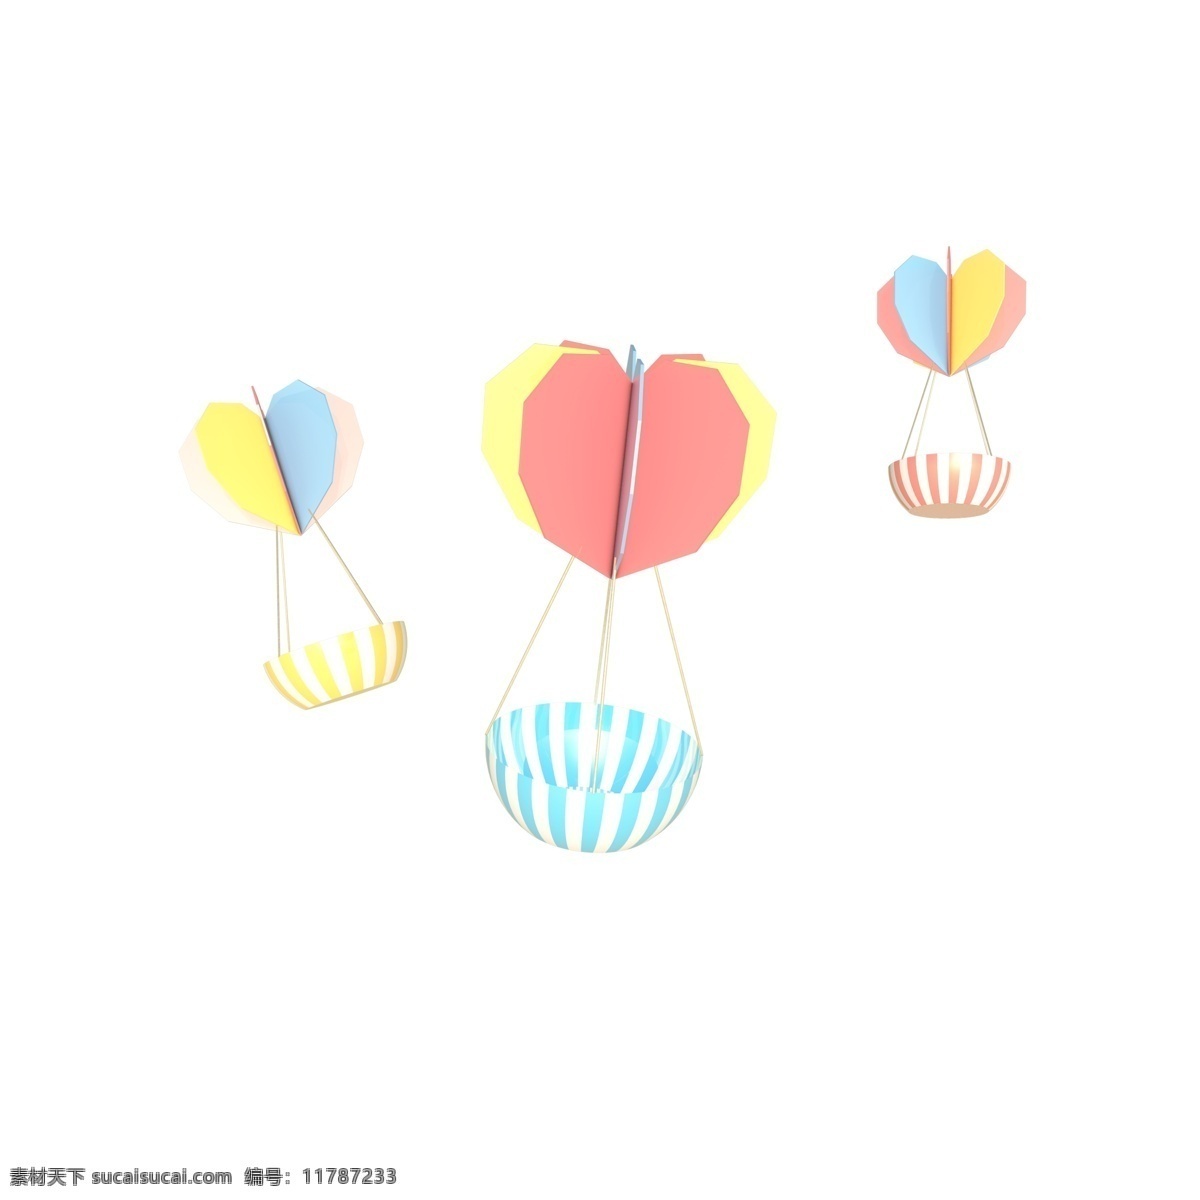 c4d 立体 情人节 爱心 氢气球 海报 装饰 3d 心形 海报装饰 糖果色 马卡龙色 条纹 电商淘宝